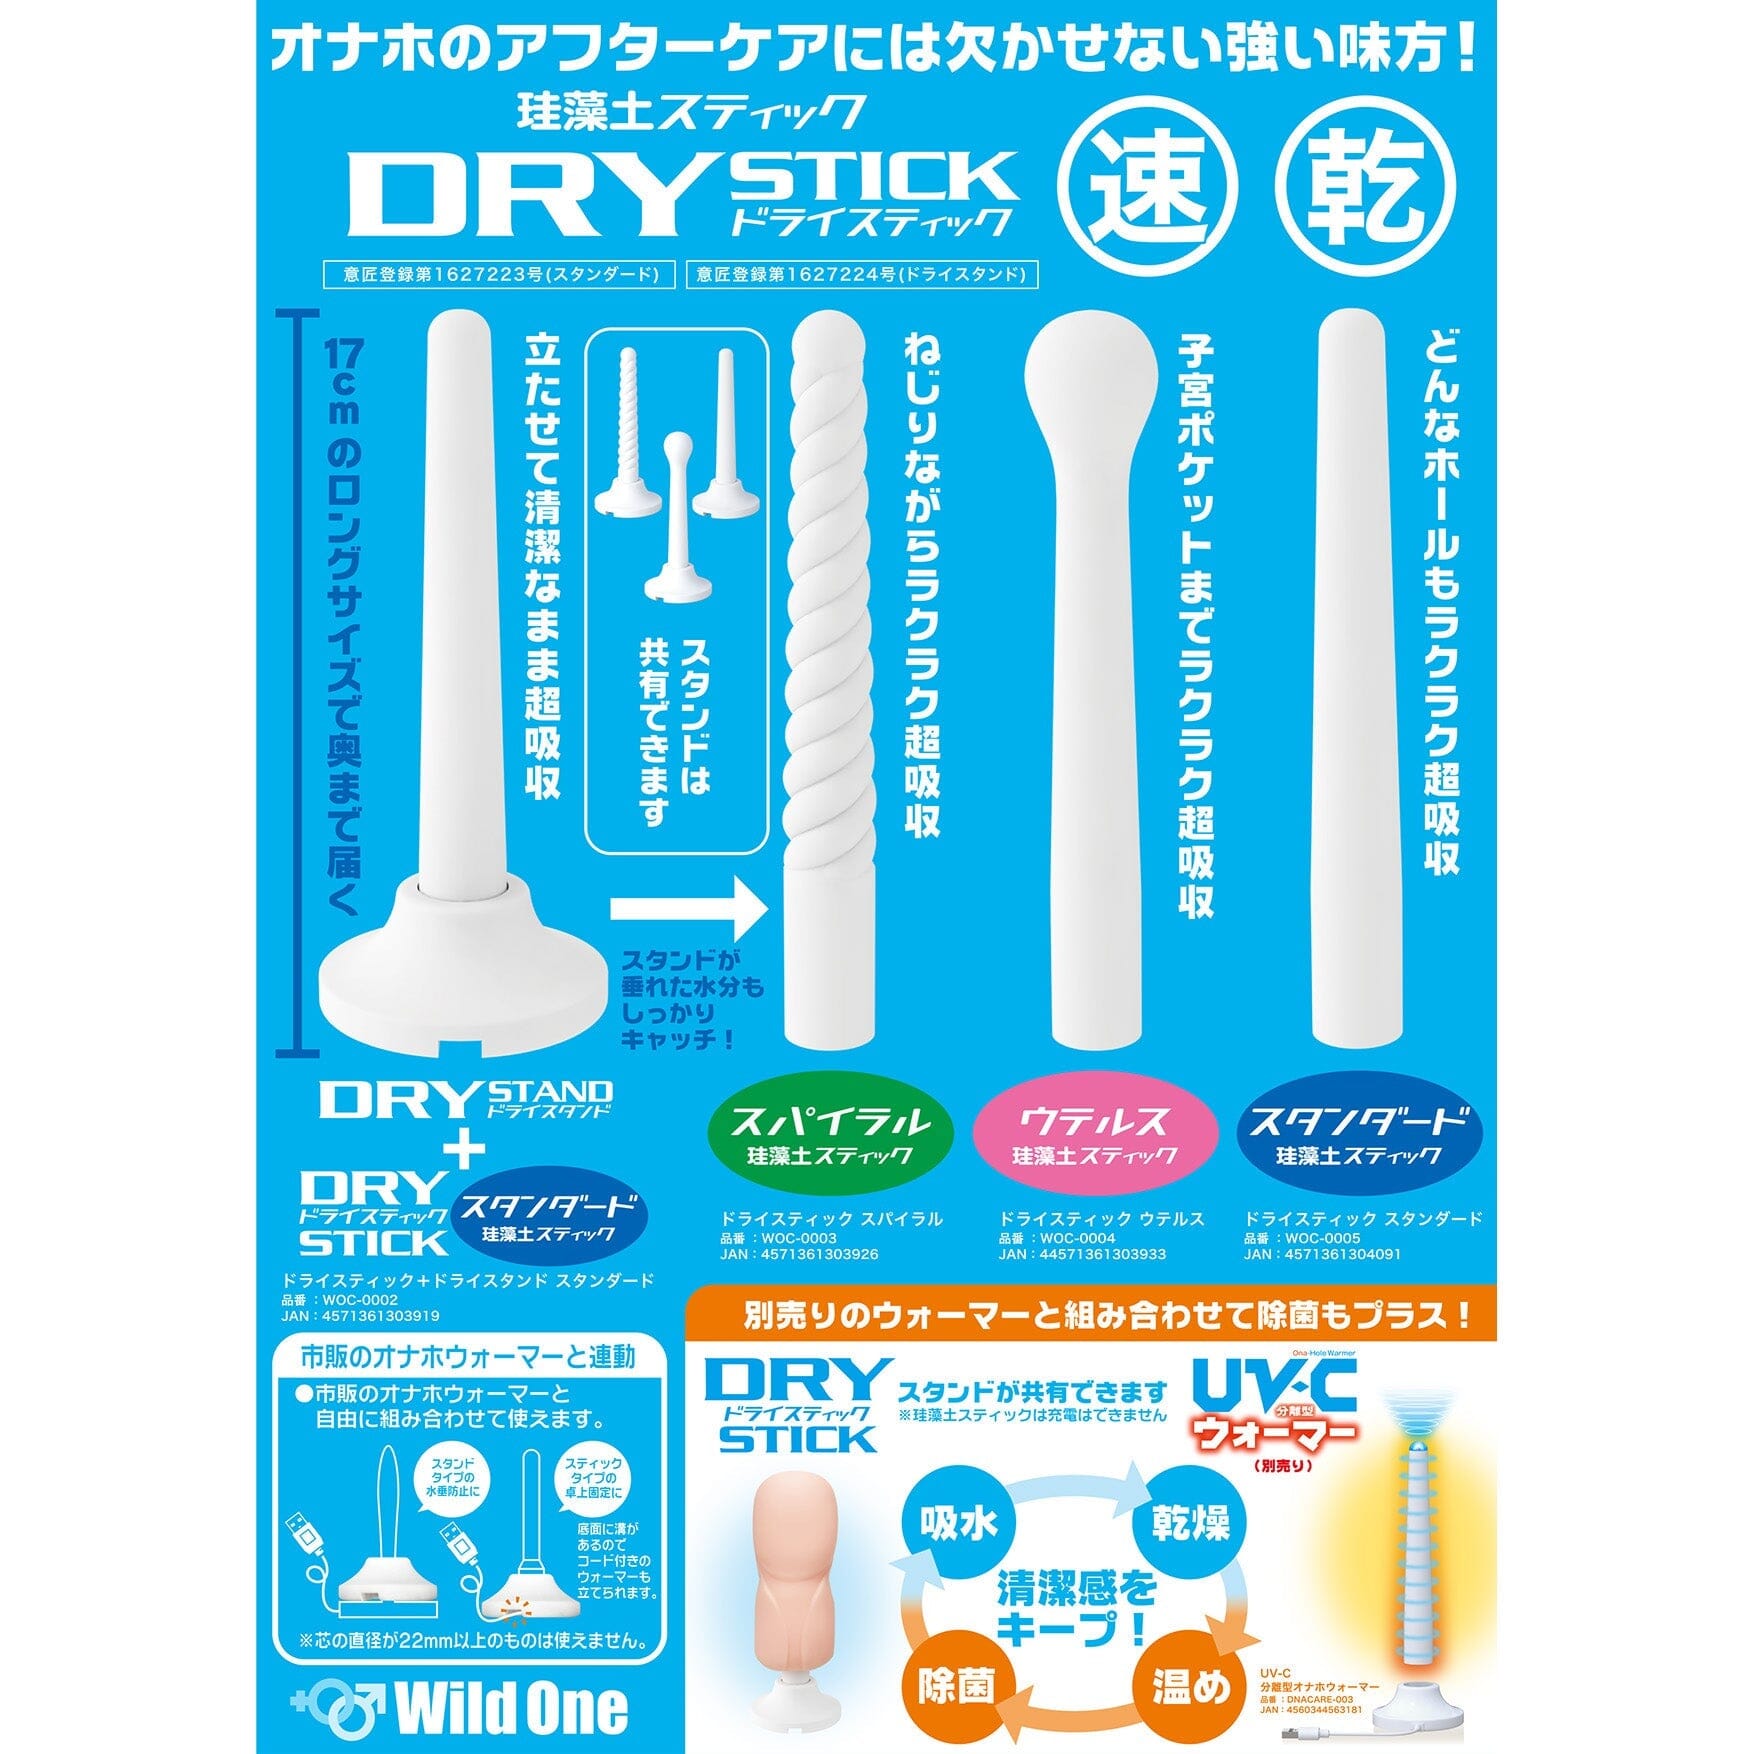 DNA JAPAN Dry Stick 子宮款專用 速乾珪藻土吸濕棒 情趣用品清潔及配件 購買